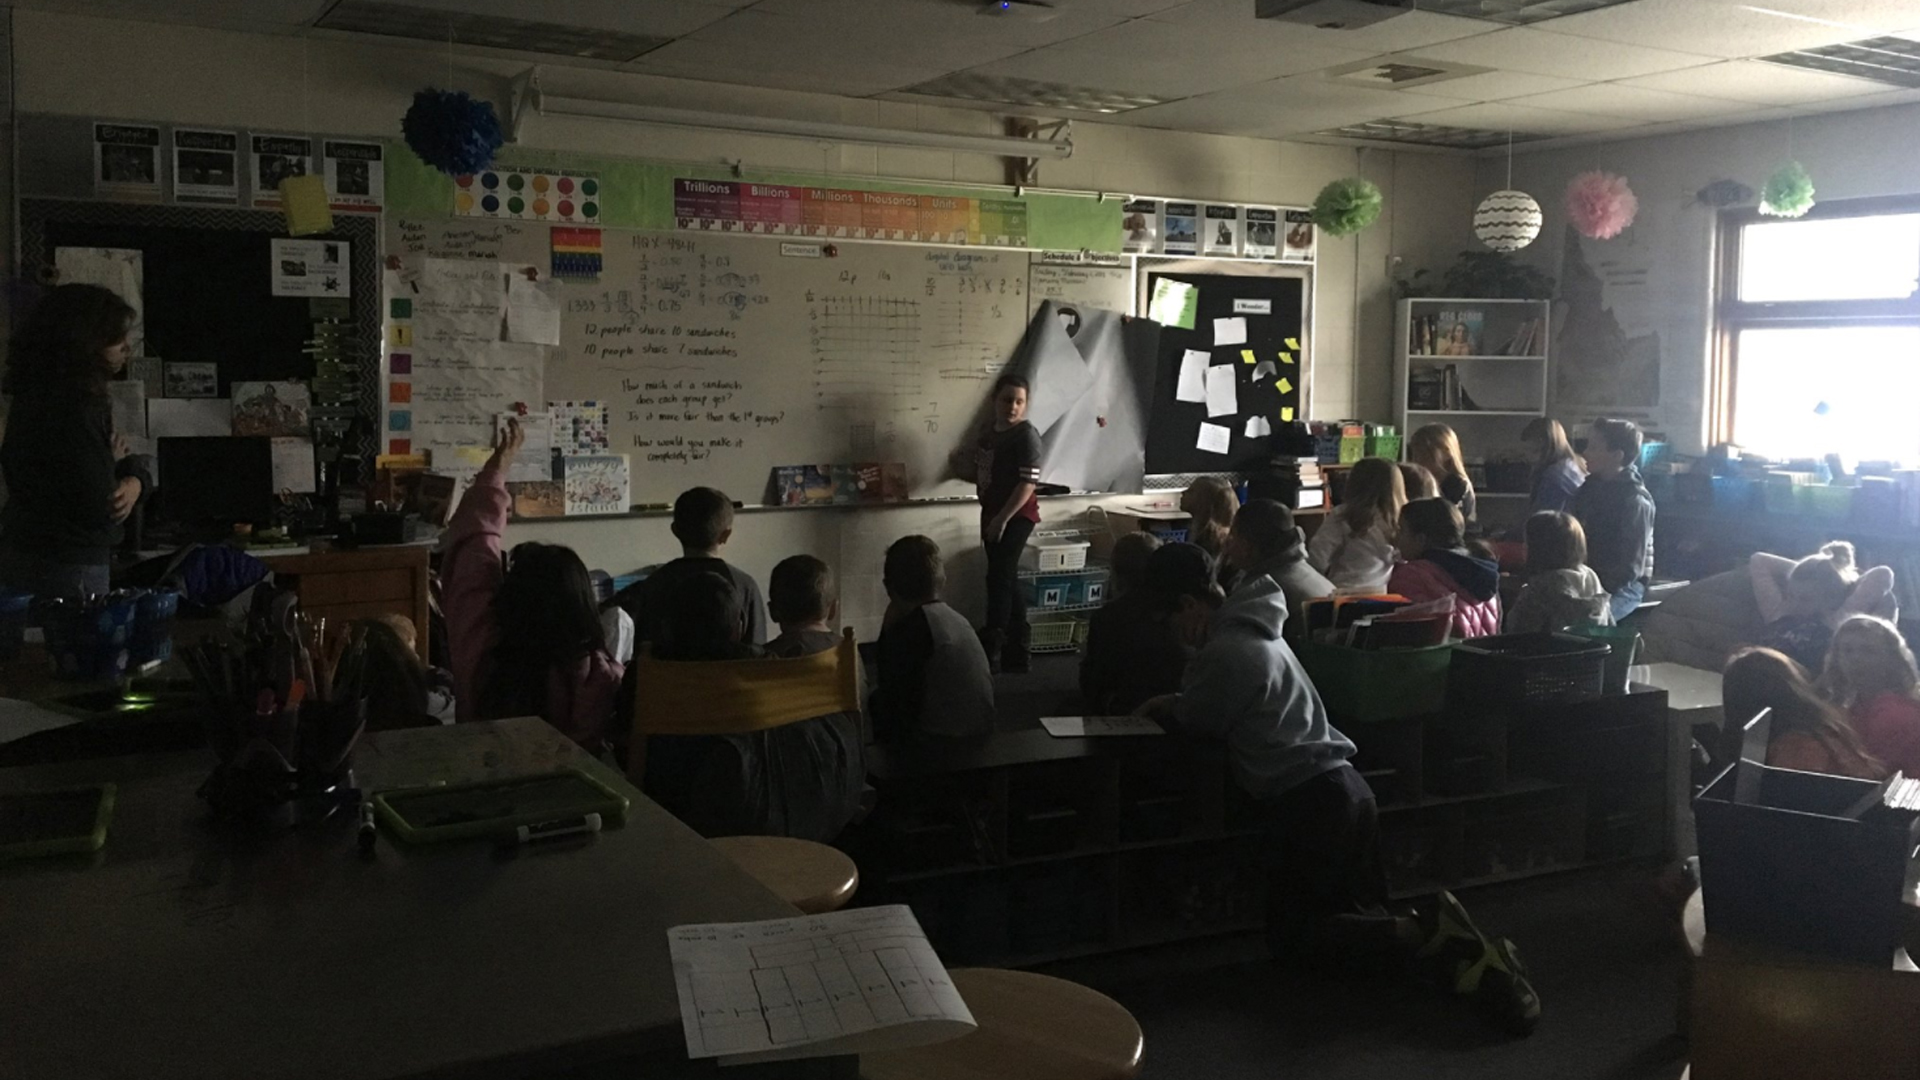 CDA classroom goes without power to teach kids a lesson | krem.com